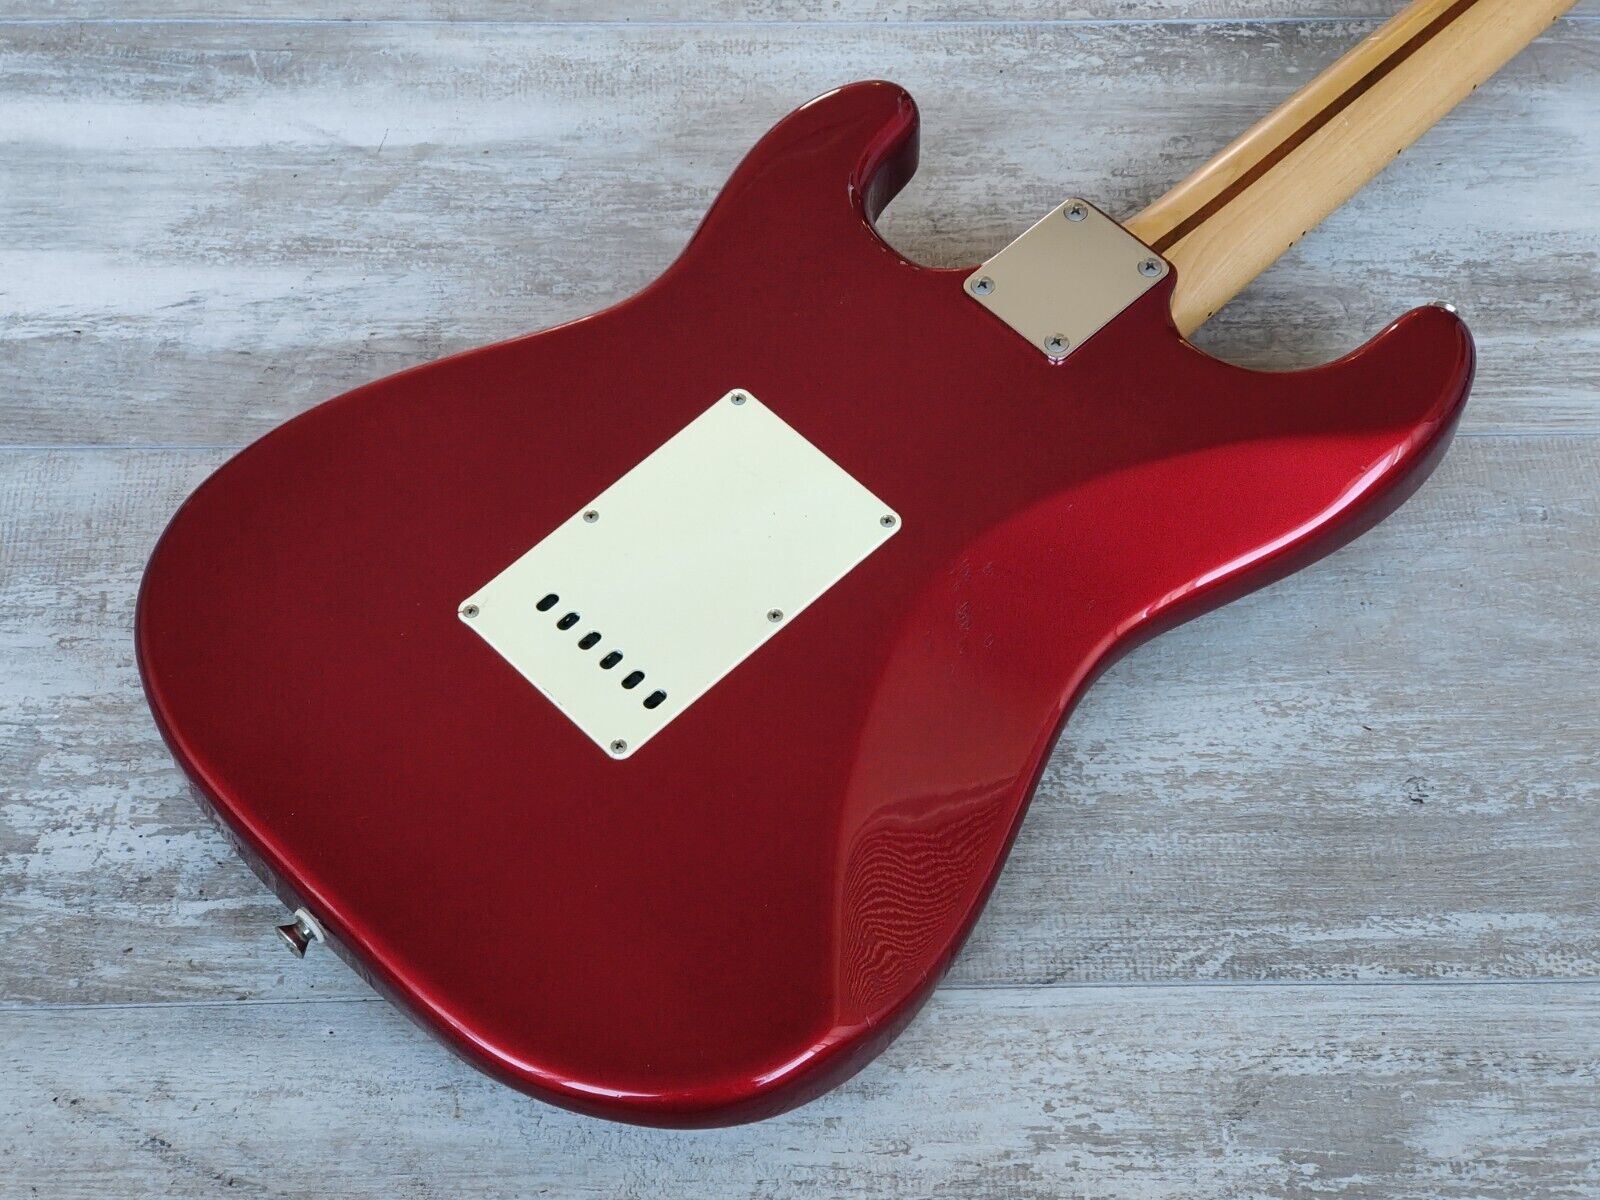 2007 Fender Japan Stratocaster Standard HSS (Candy Apple Red)